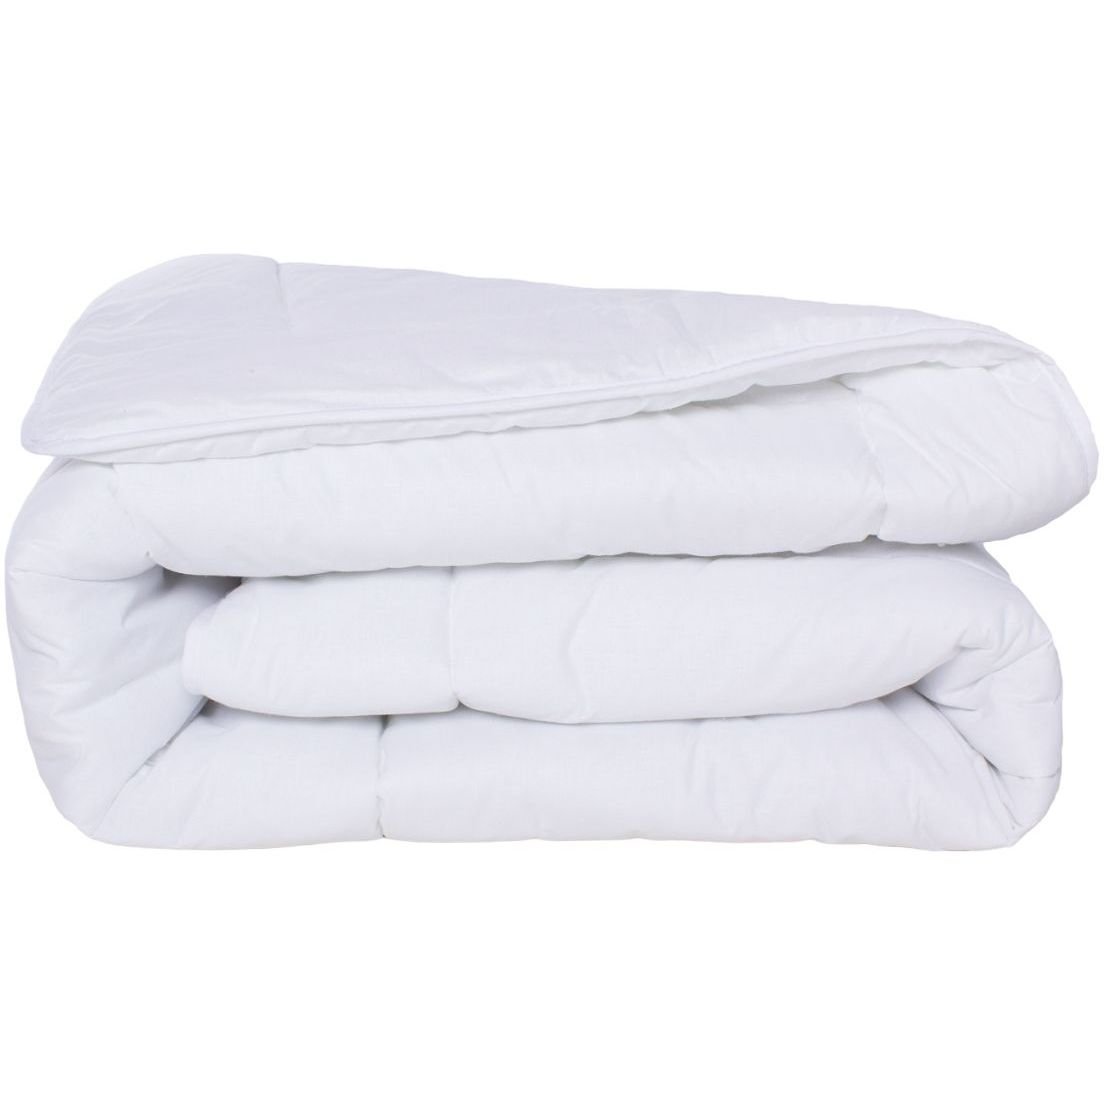 Одеяло шерстяное MirSon Bianco Экстра Премиум №0786, демисезонное, 110x140 см, белое - фото 1